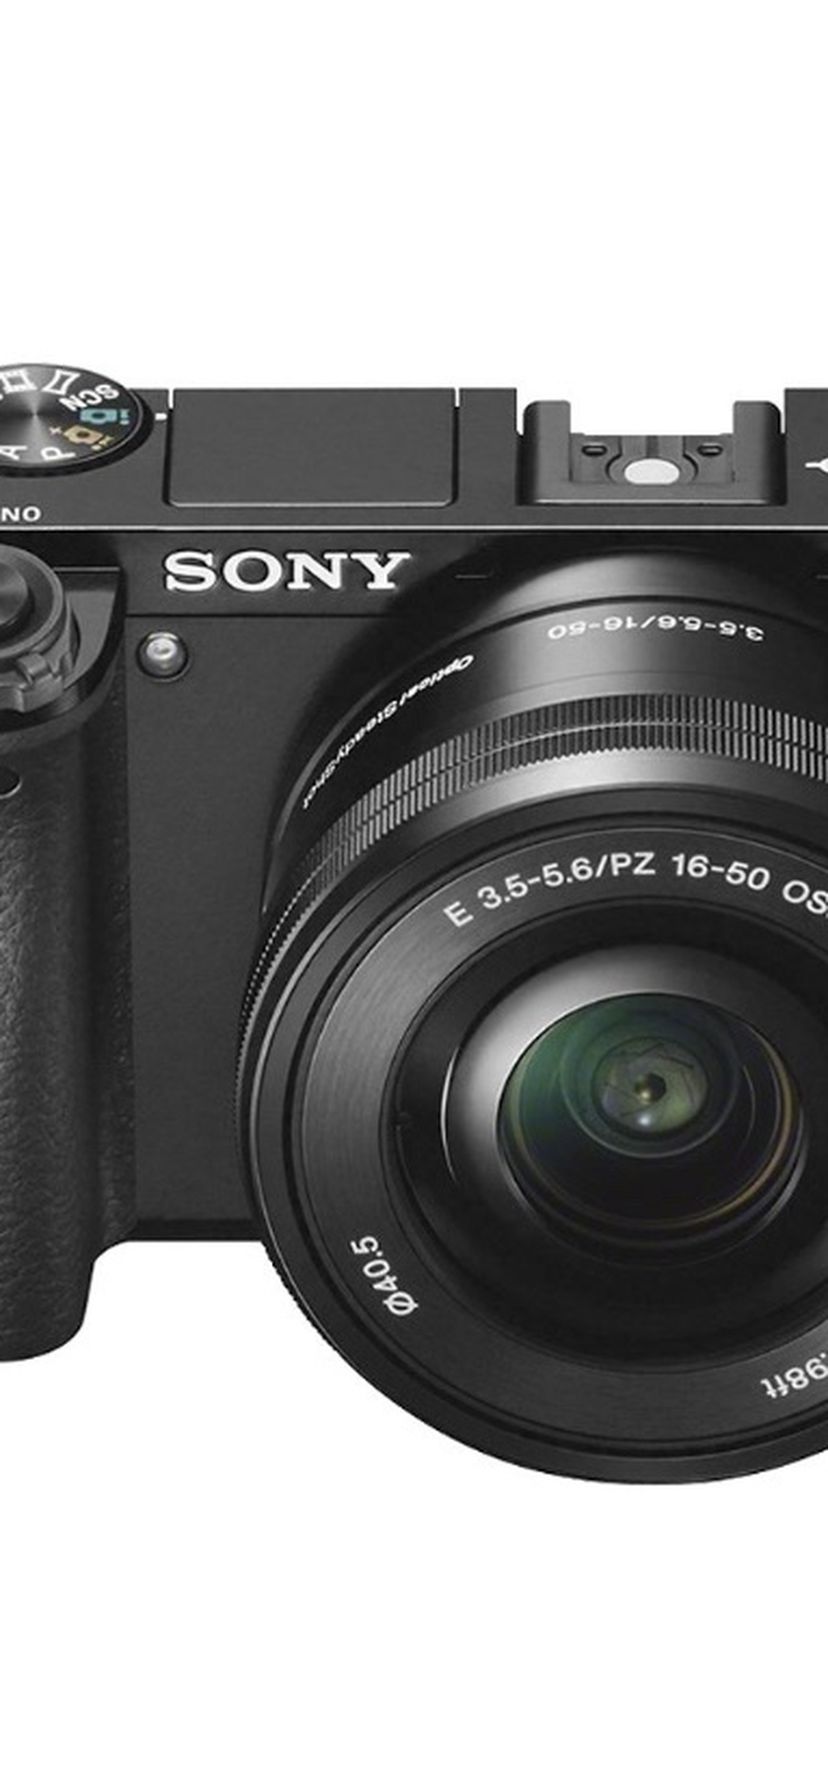 Sony Alpha A6000 Mirrorless Camera HD Video Retractable Lens E Mount Plus Accessories